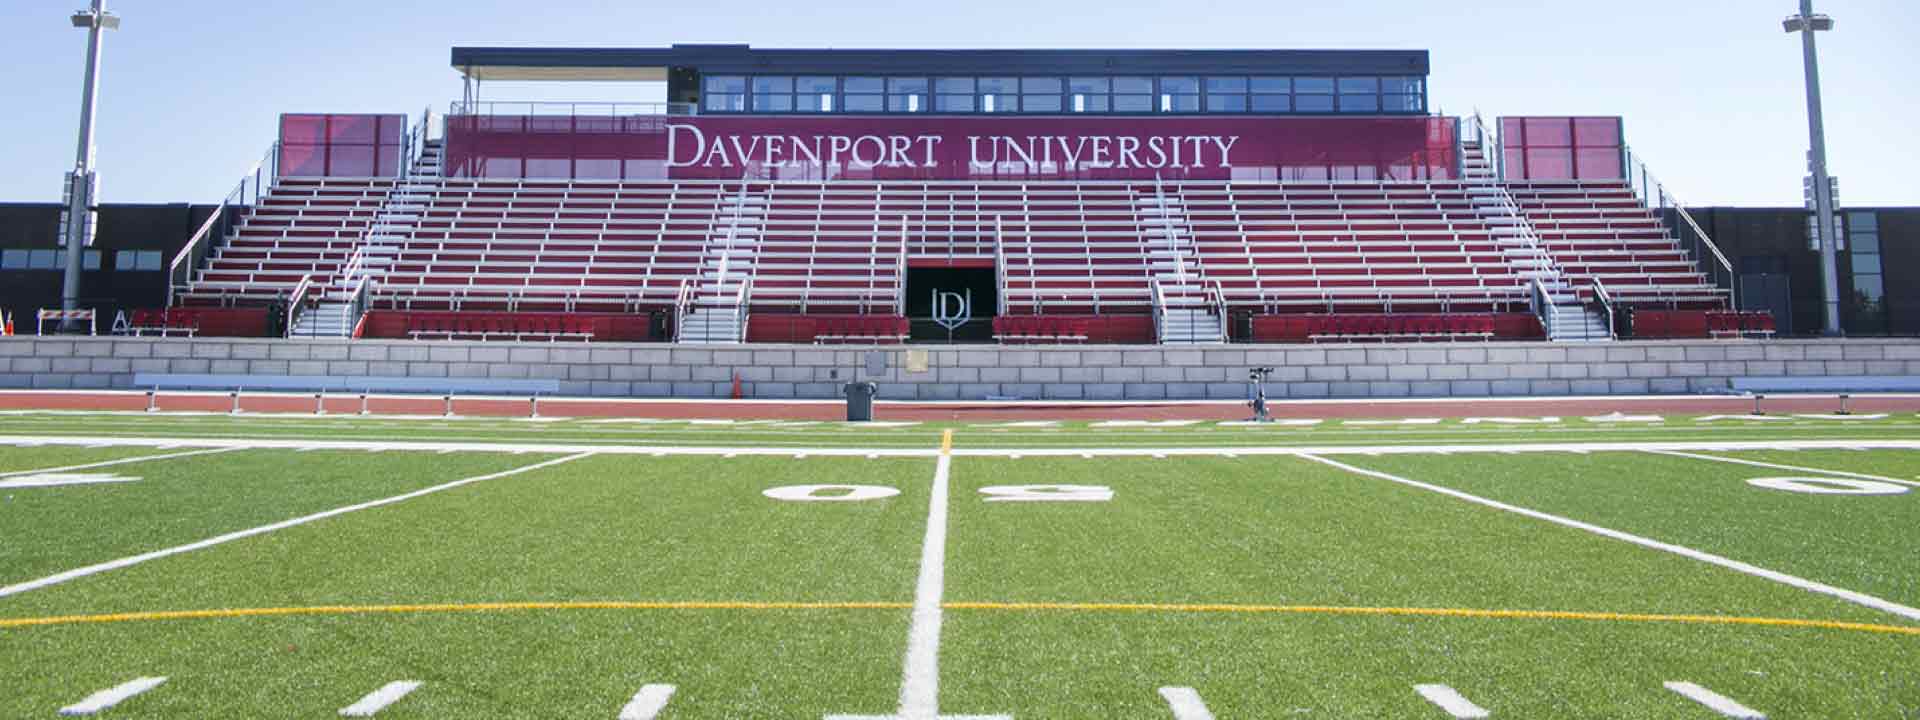 davenport-university